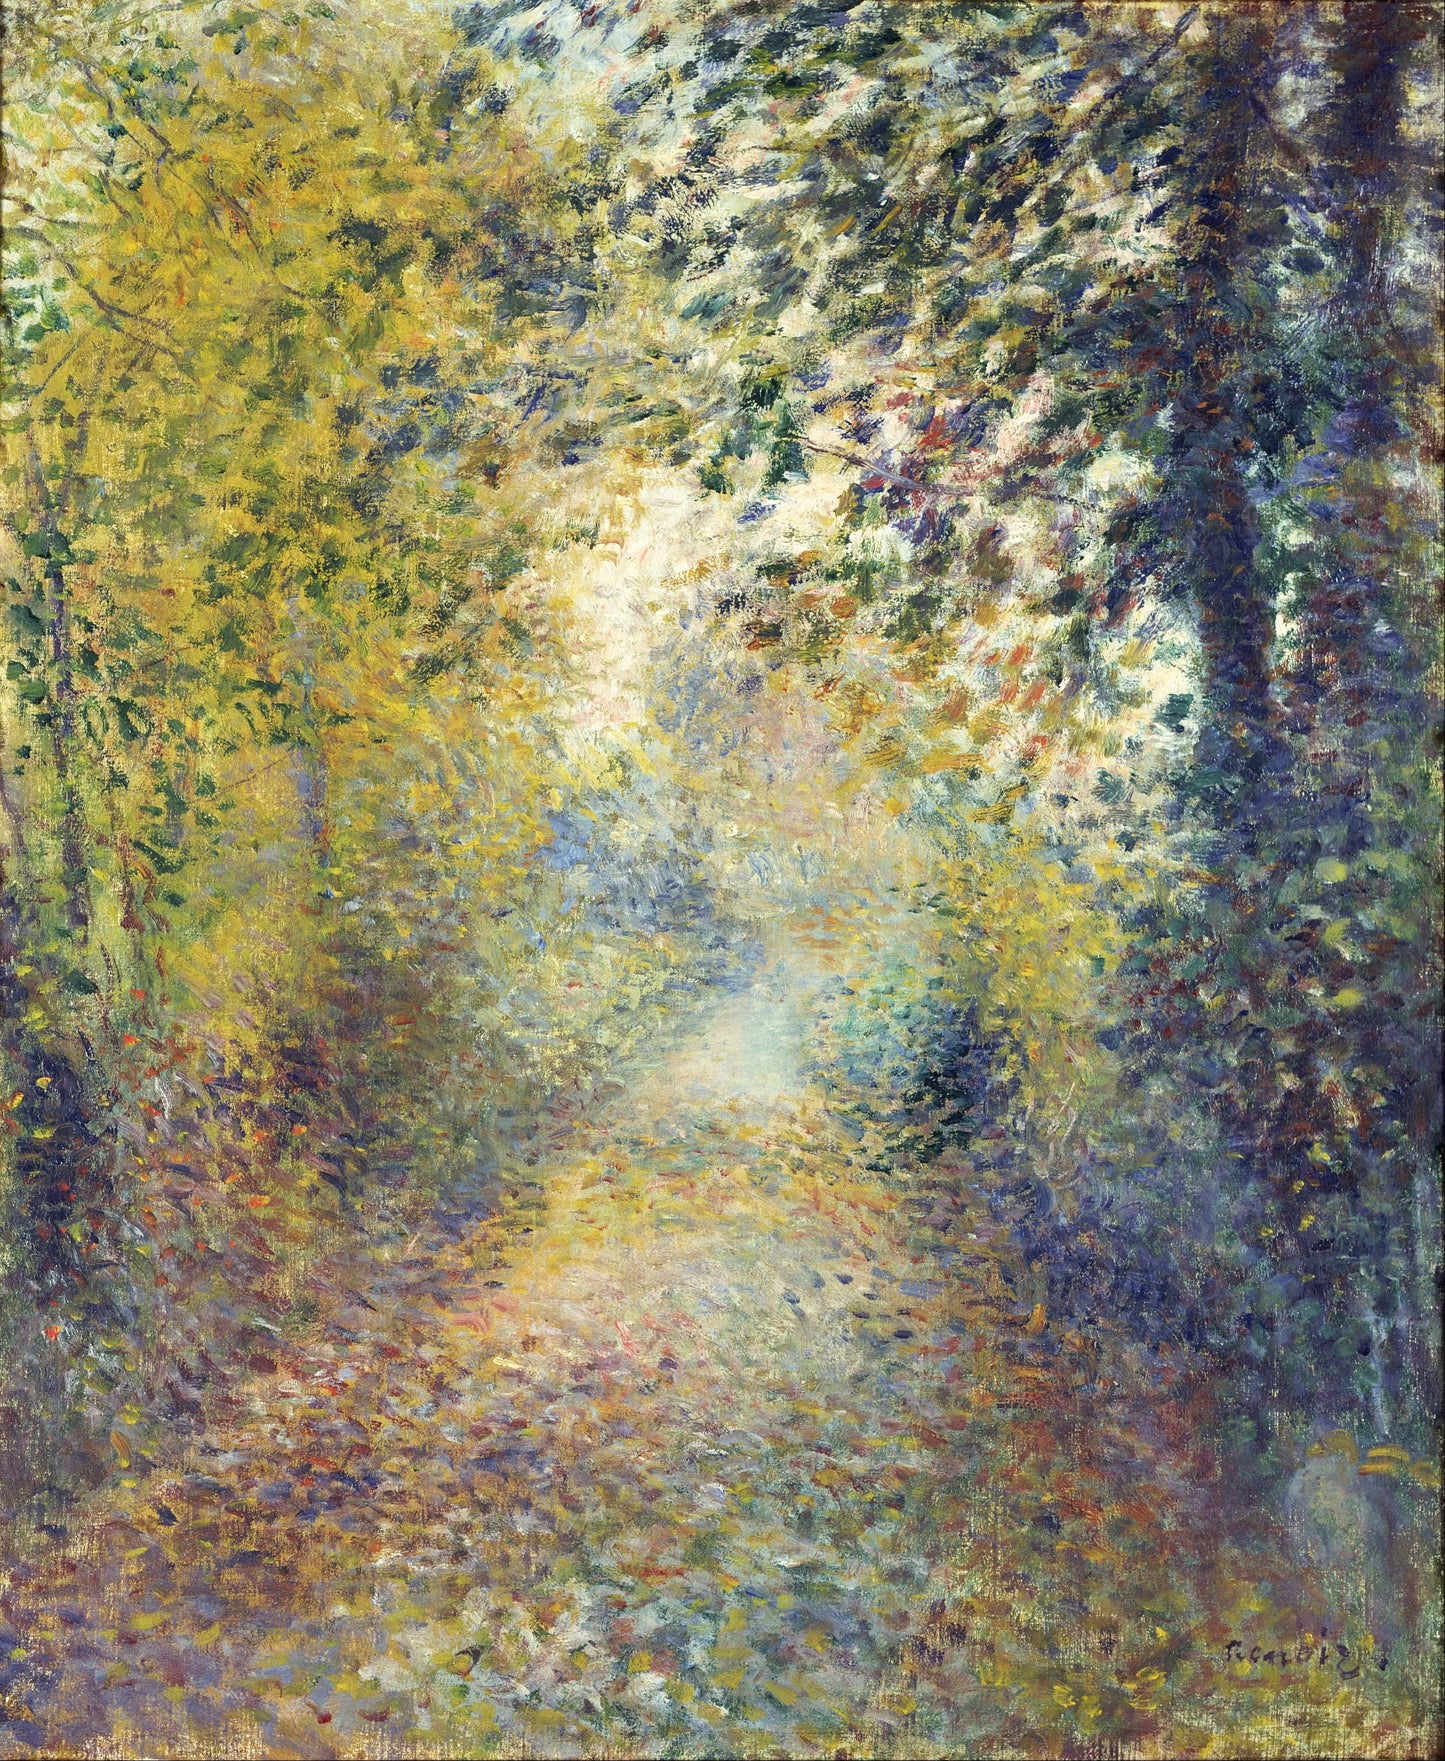 Pierre Renoir Impressionist Paintings Set 8 [24 Images]